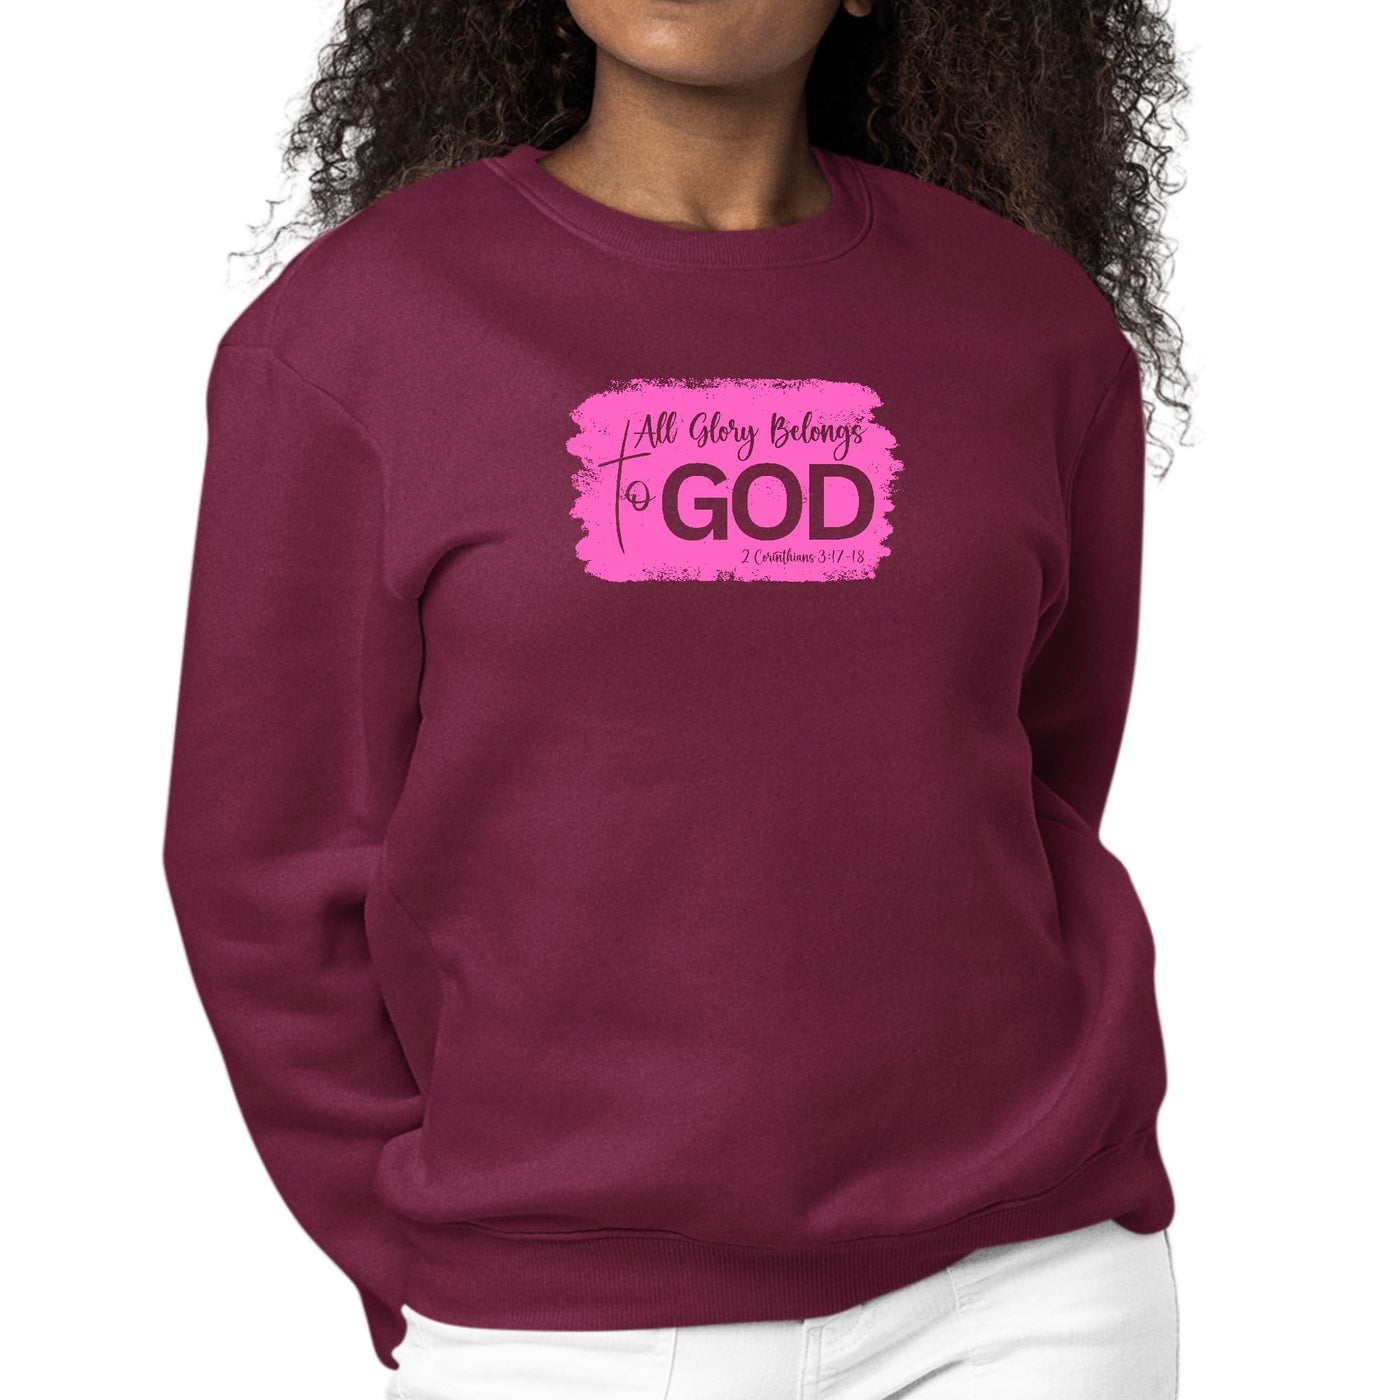 Womens Graphic Sweatshirt All Glory Belongs To God Christian - Womens